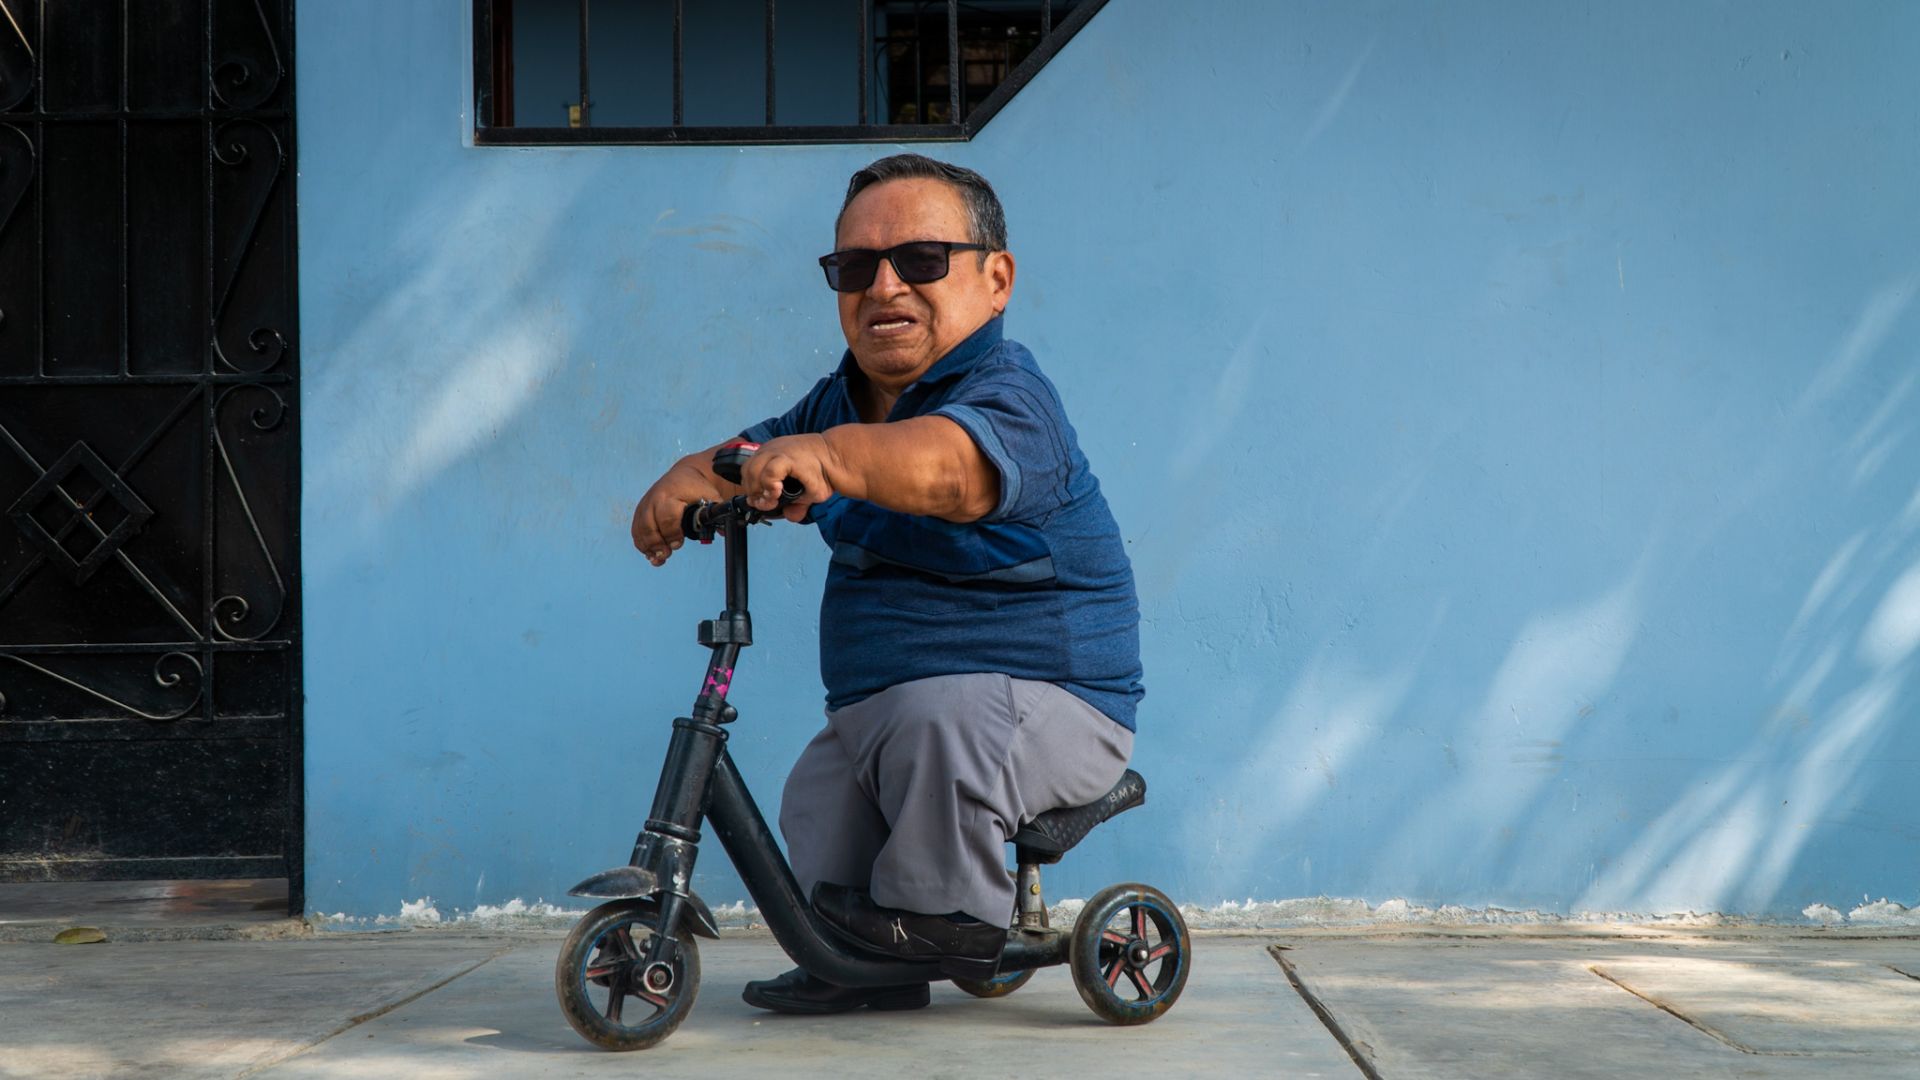 A man rides a scooter in Lima, Peru